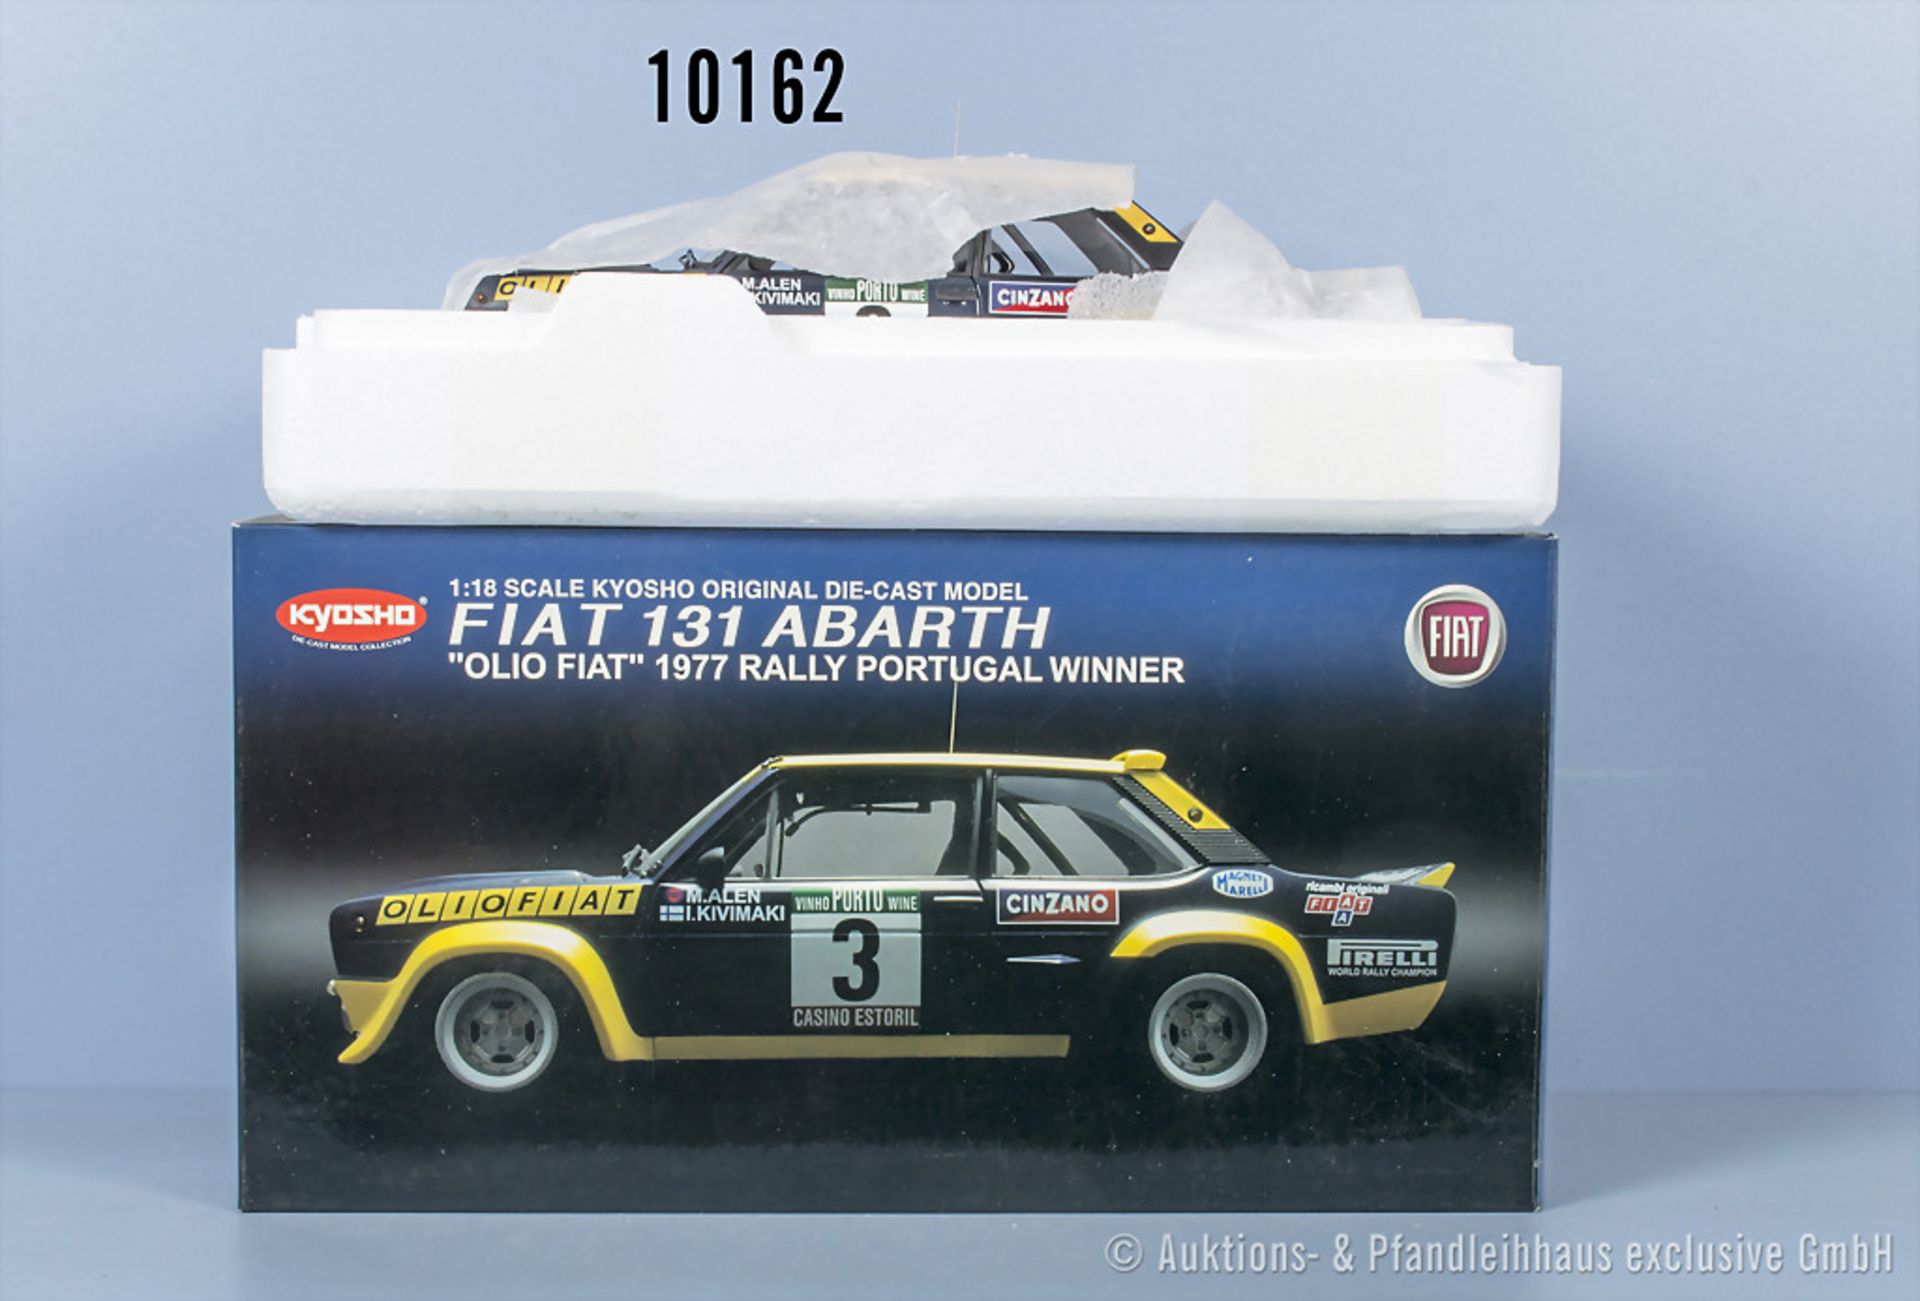 Kyosho No. 08372B Fiat 131 Abarth "Olio Fiat" 1977 Rally Portugal Winner, Metall, 1:18, ...